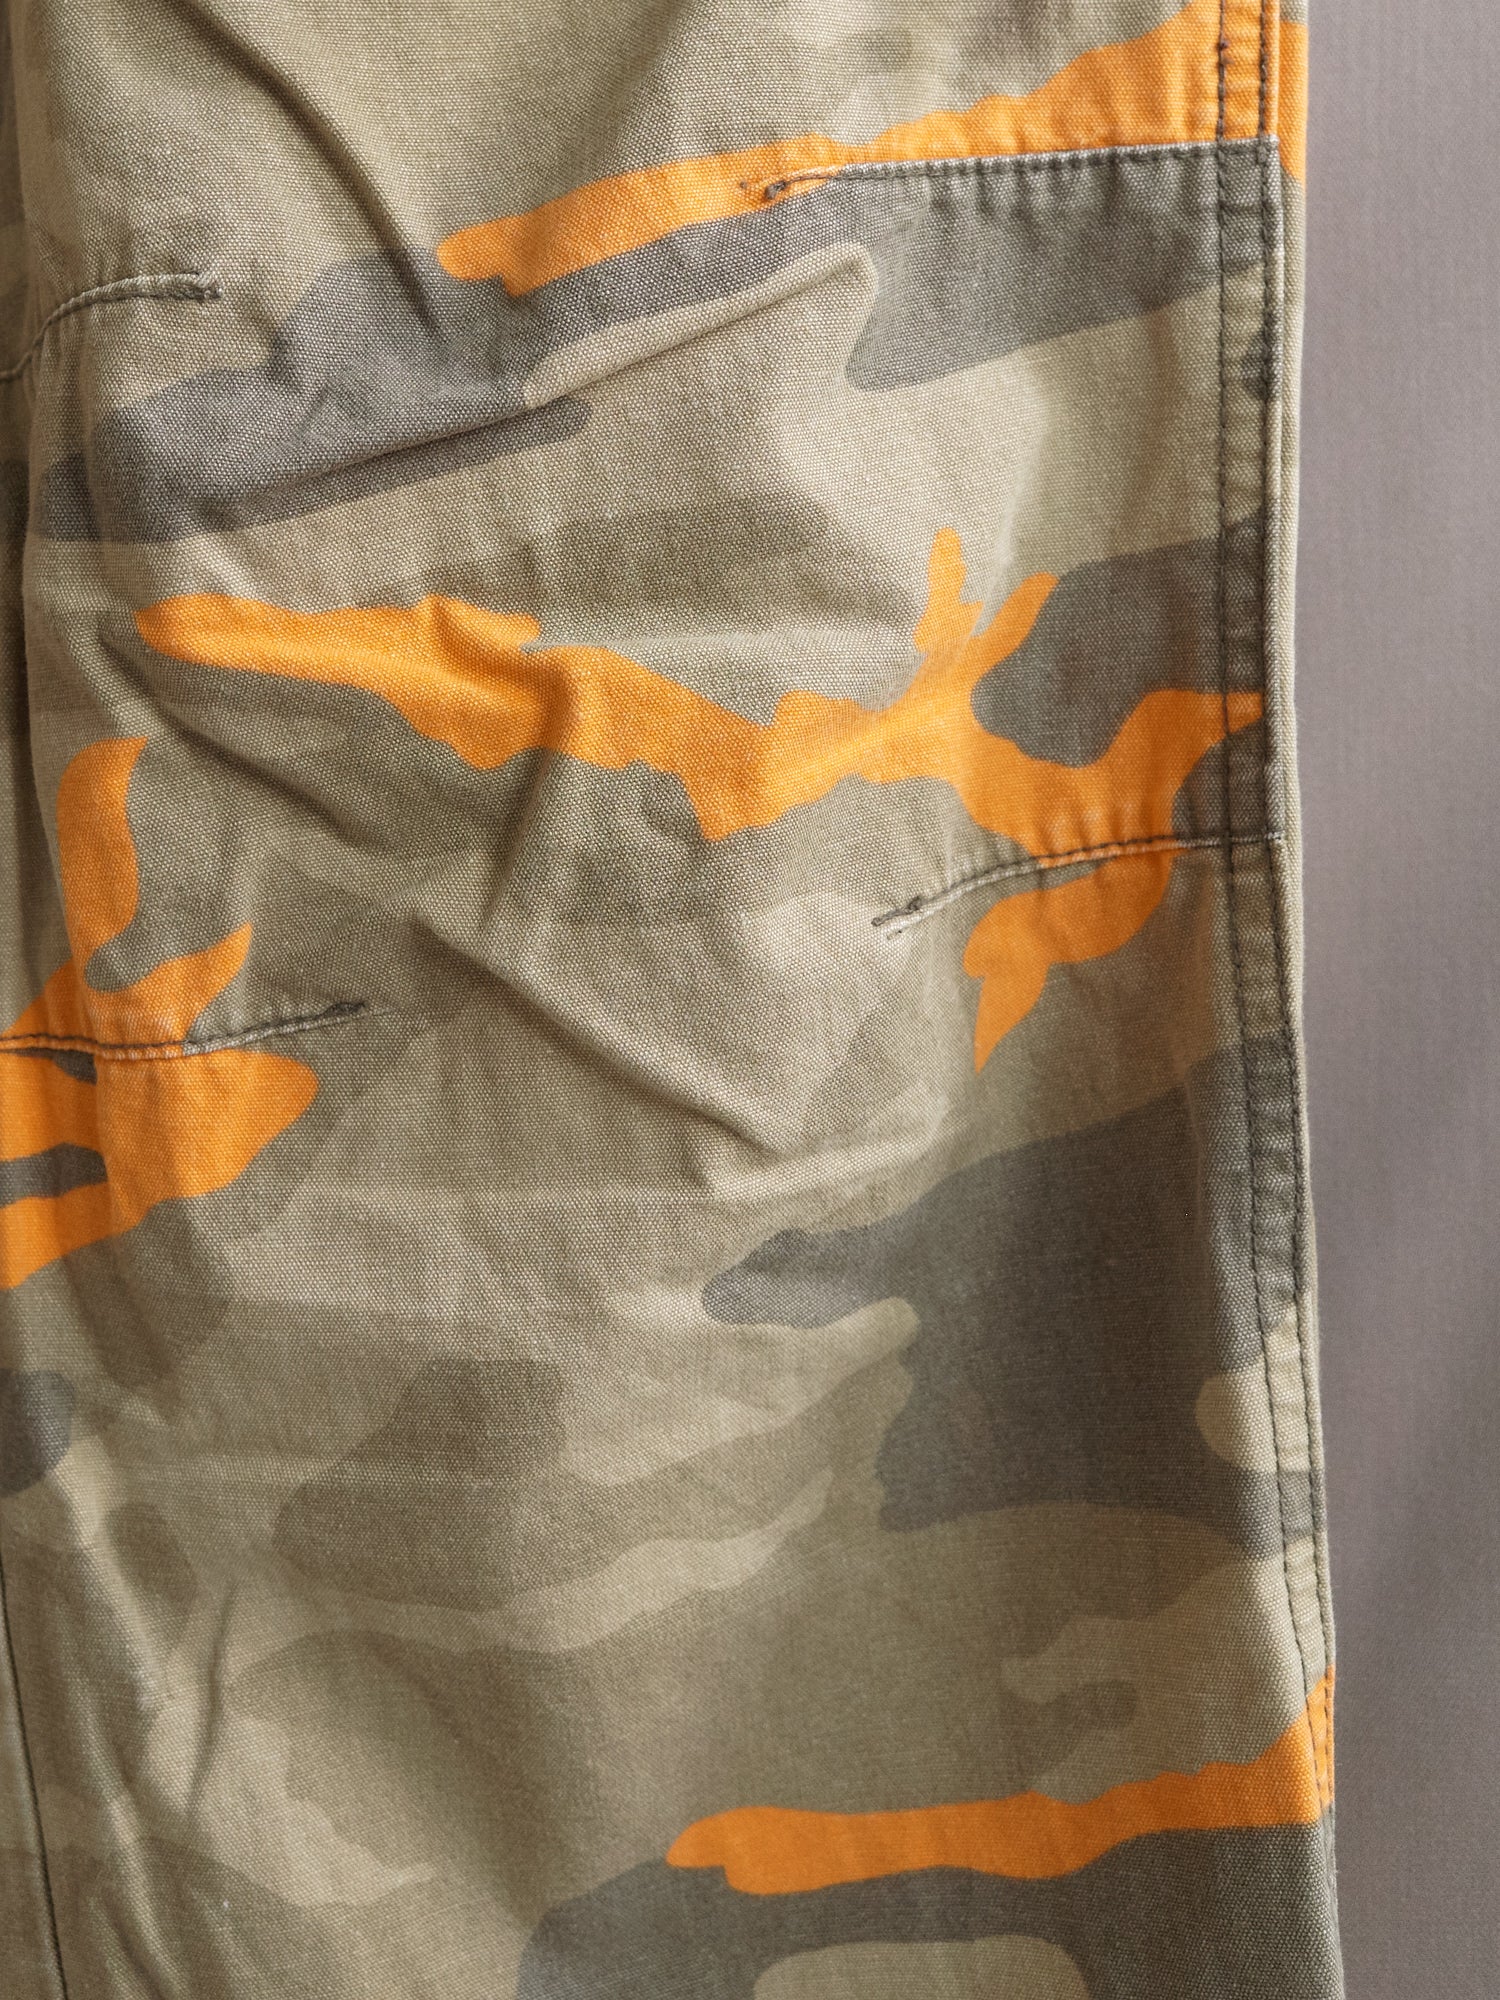 DKNY 1990s beige khaki orange camo multi pocket cargo trousers - womens M